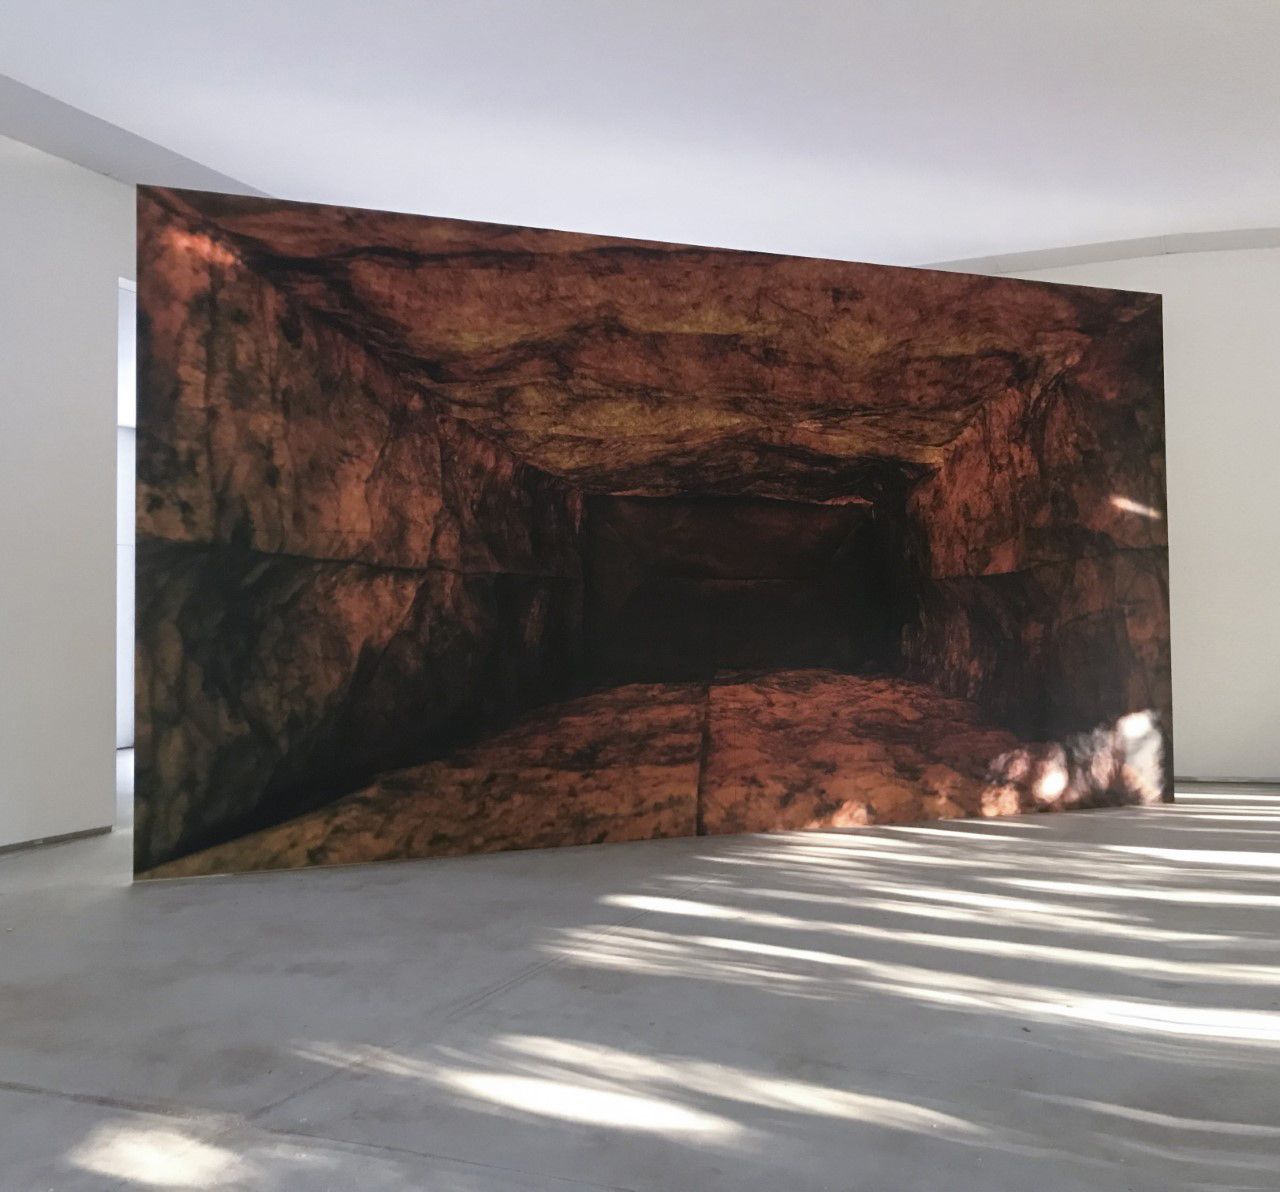 PROPAGANDA, 2021, Lucia Koch. obra instalada na Galeria Praça, no Instituto Inhotim